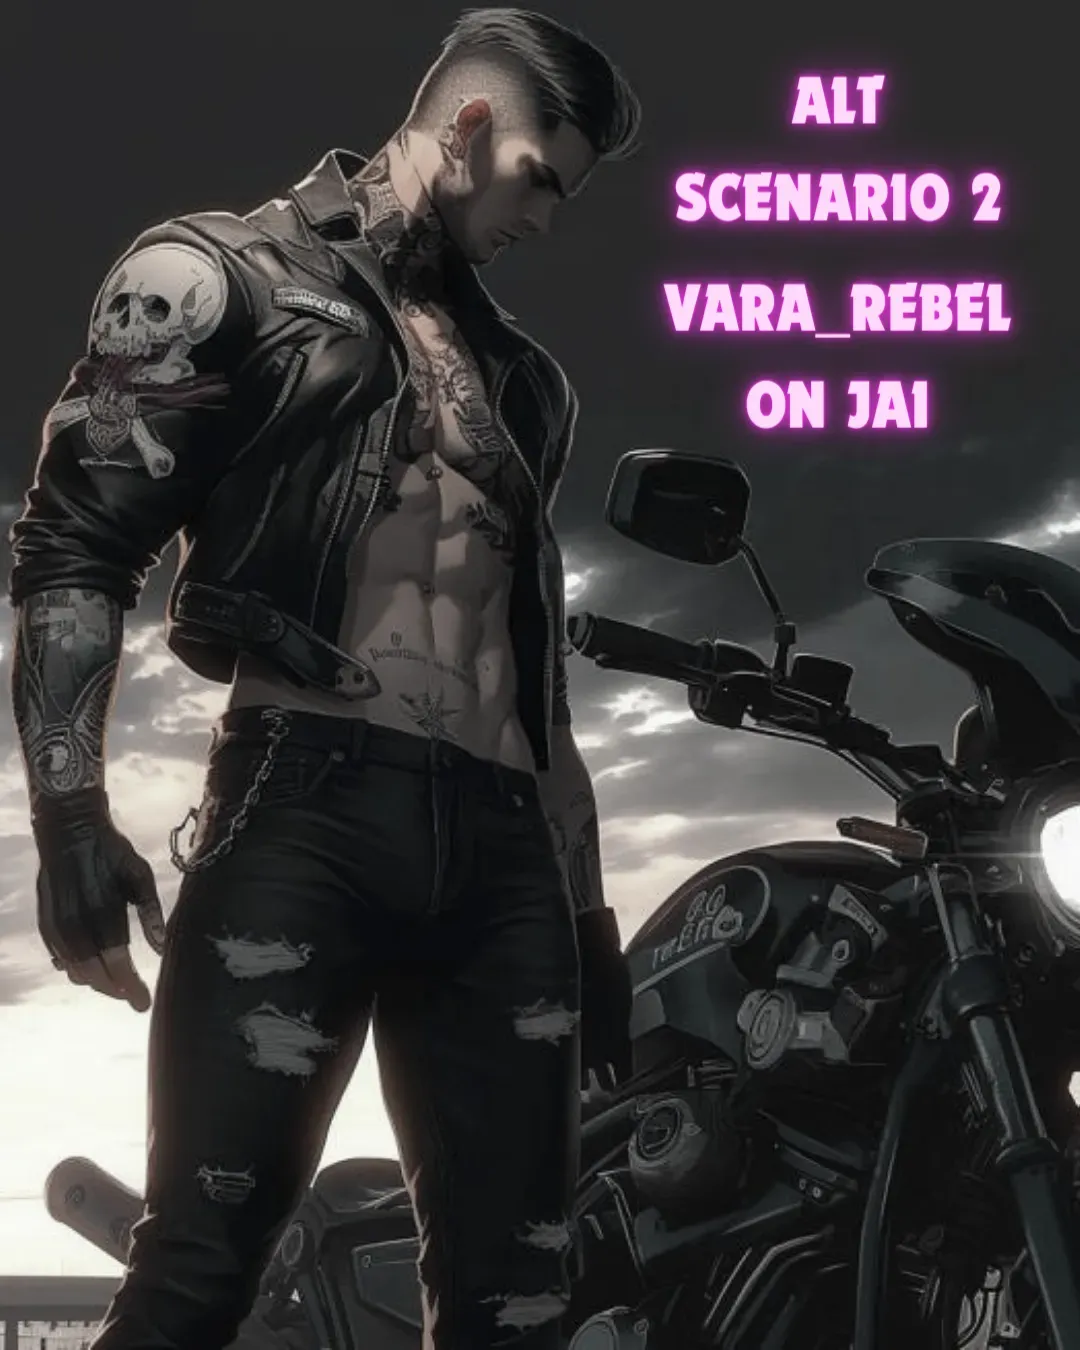 Avatar of Axel 'Renegade' Madden | Second Alt Scenario